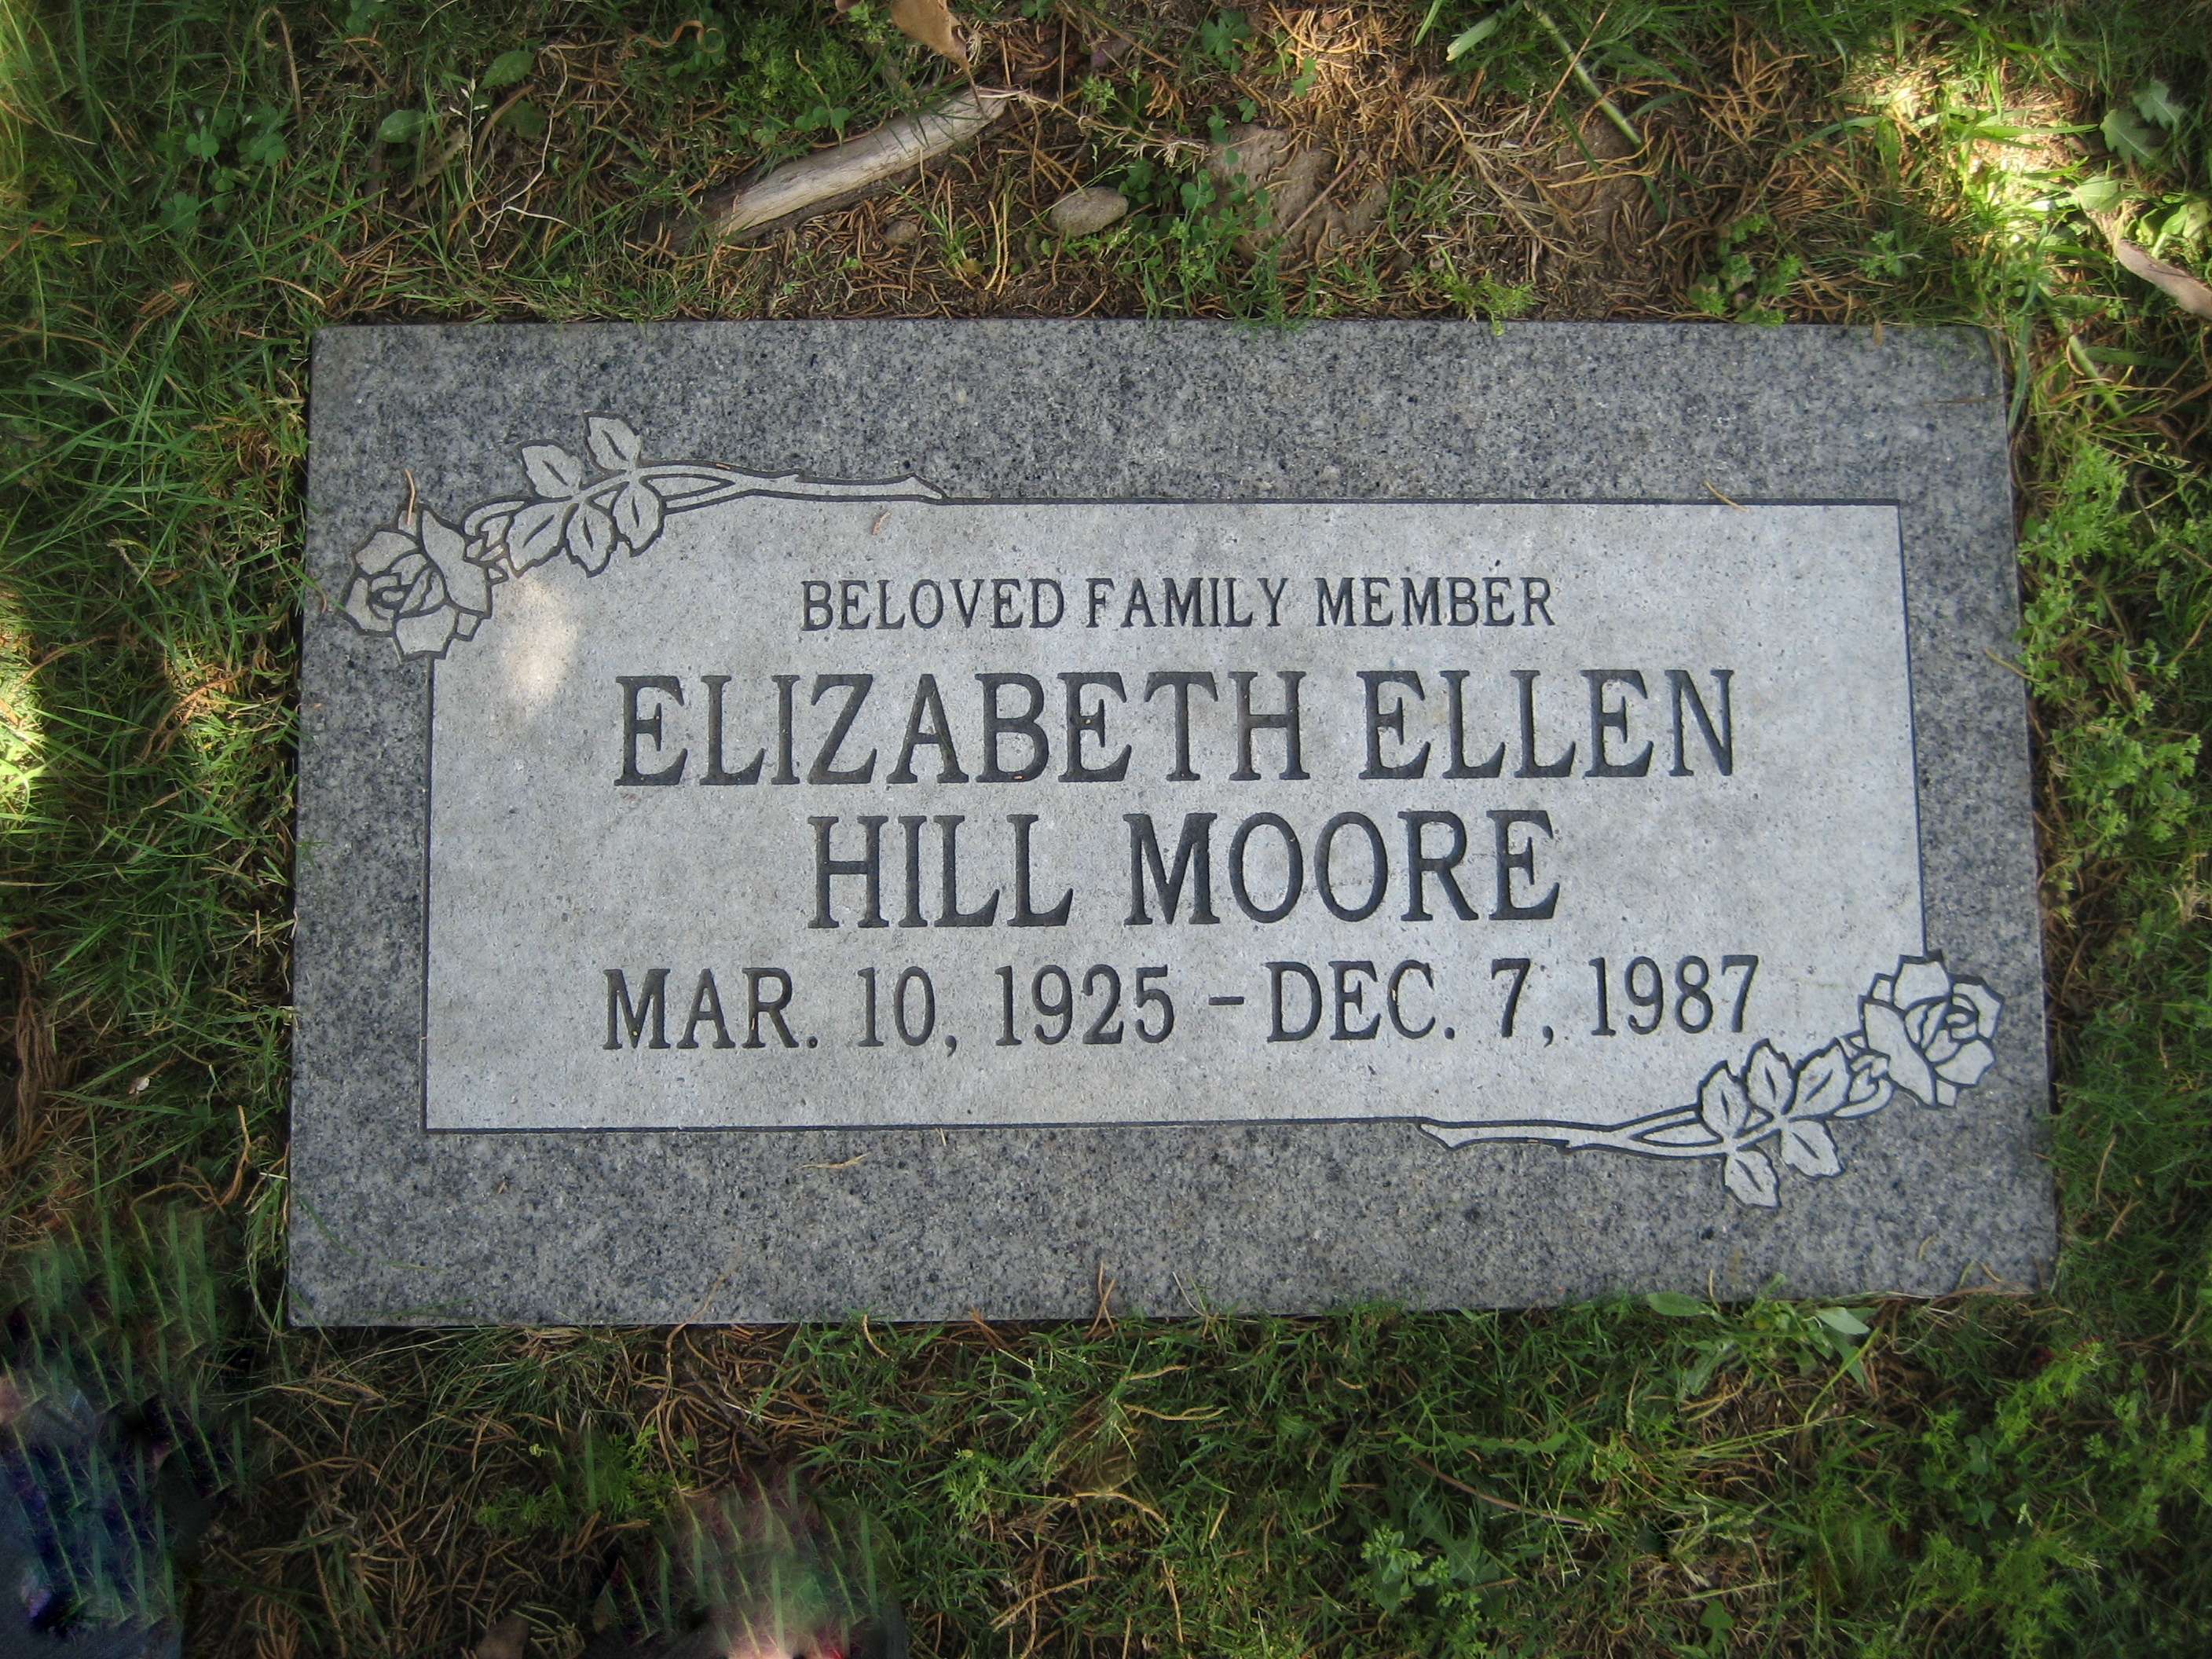 Elizabeth Ellen Hill Moore